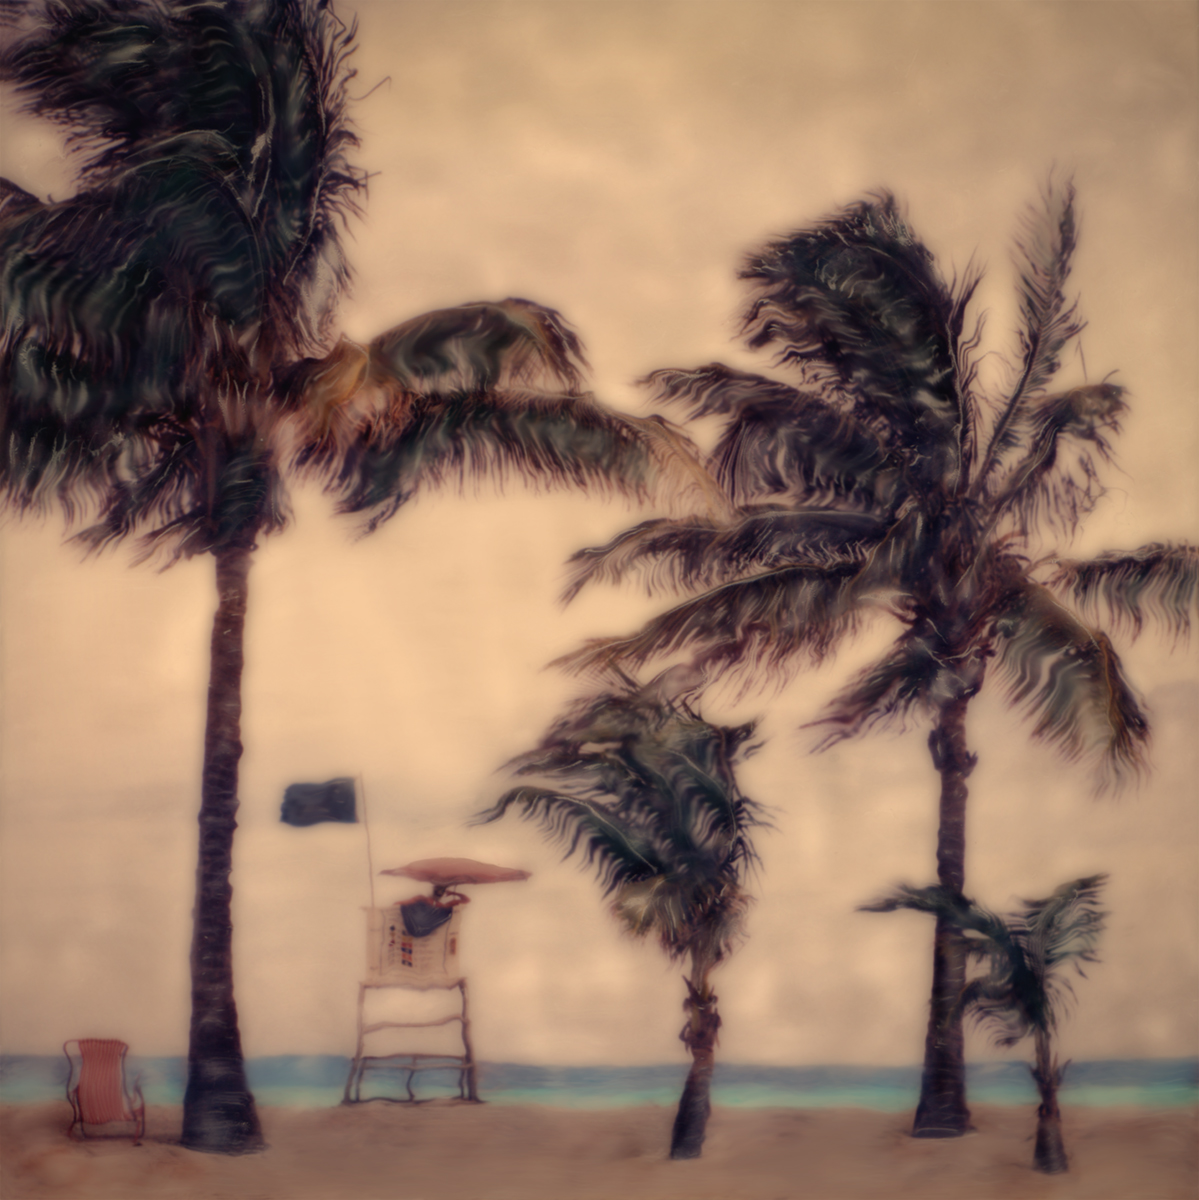 "Lifeguard Stand Hollywood Beach, FL Big Palms Little Palms"